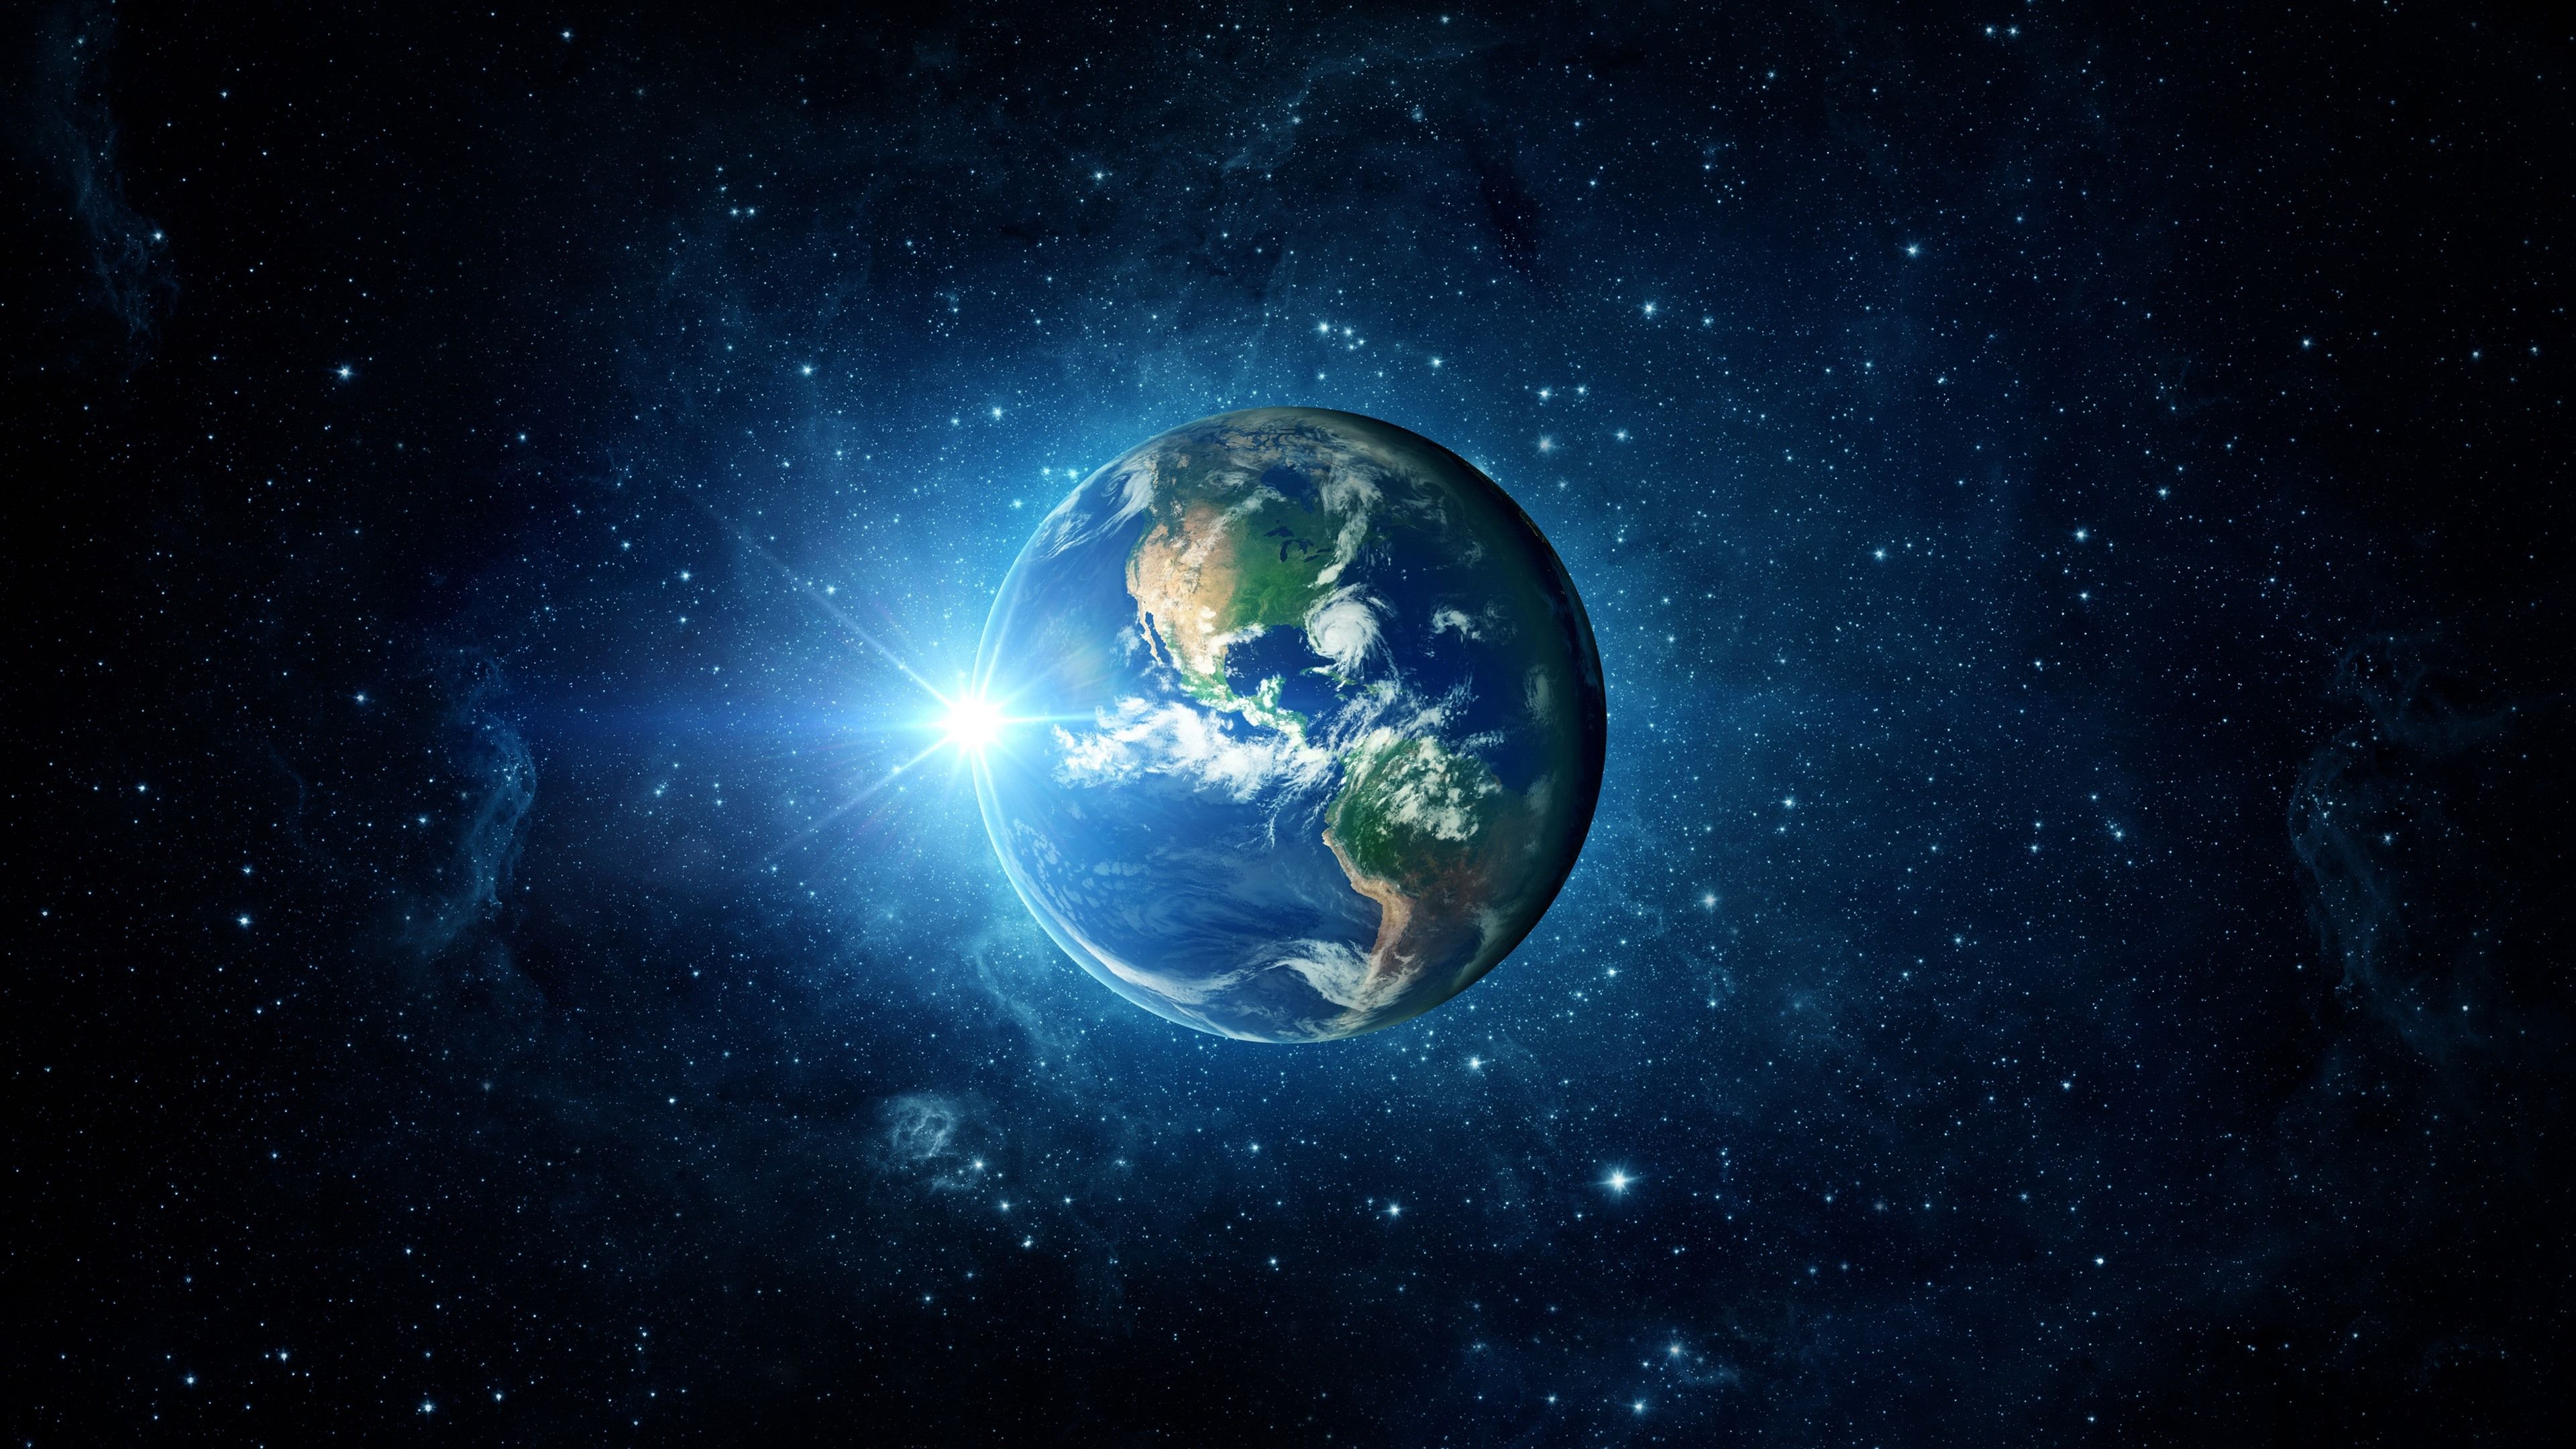 Wallpaper Beautiful Earth, blue planet, sun, stars, galaxy 3840x2160 UHD 4K Picture, Image